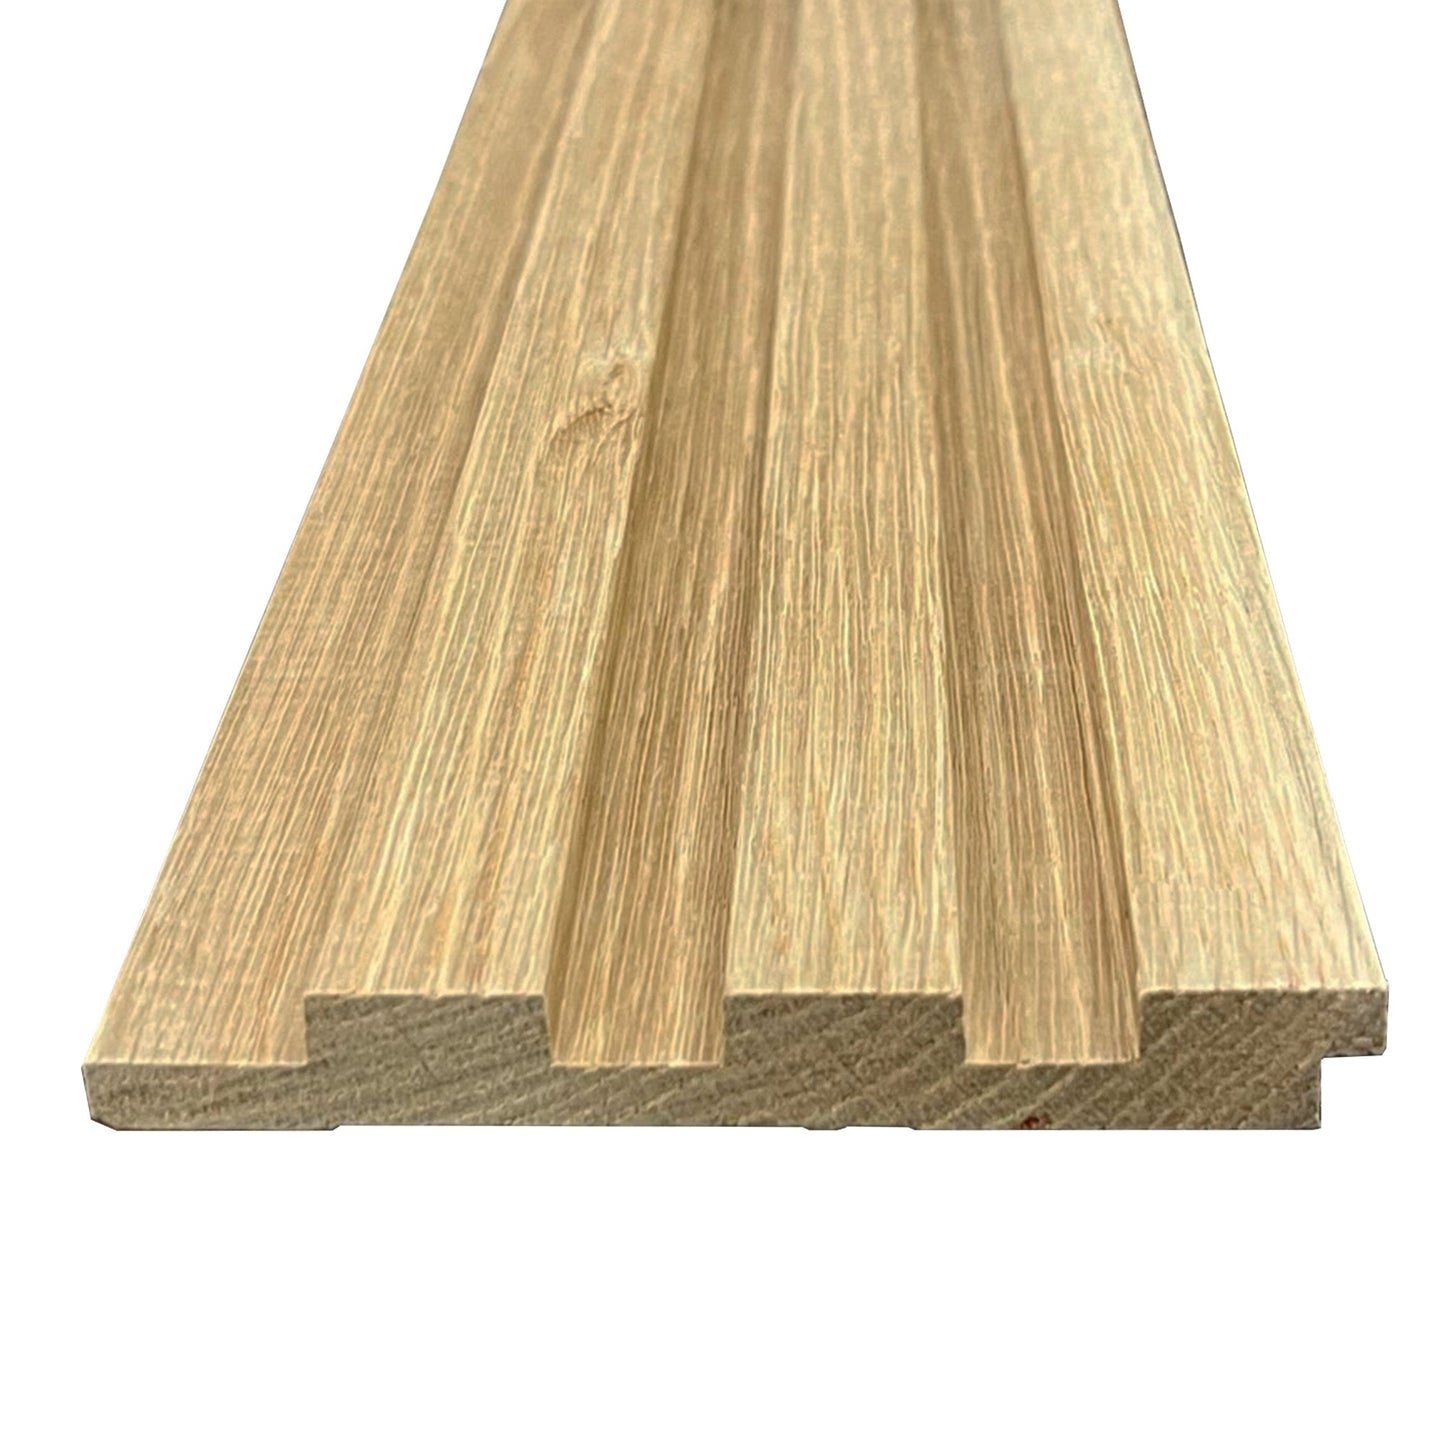 Wood Slat Wall Samples